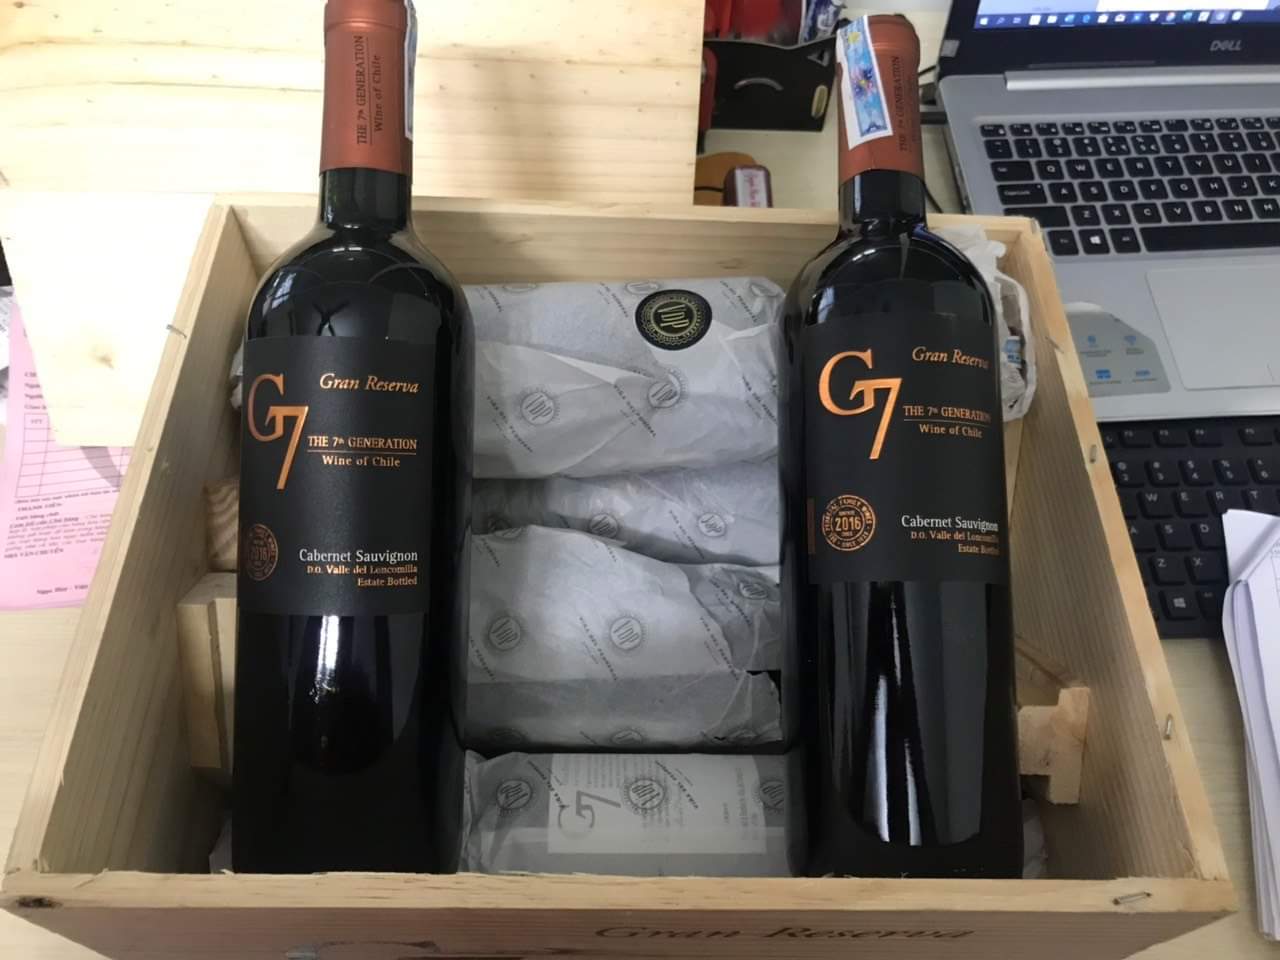 vang chi le g7 grand reserva cabernet Sauvignon PHANPHOIRUOUVANG